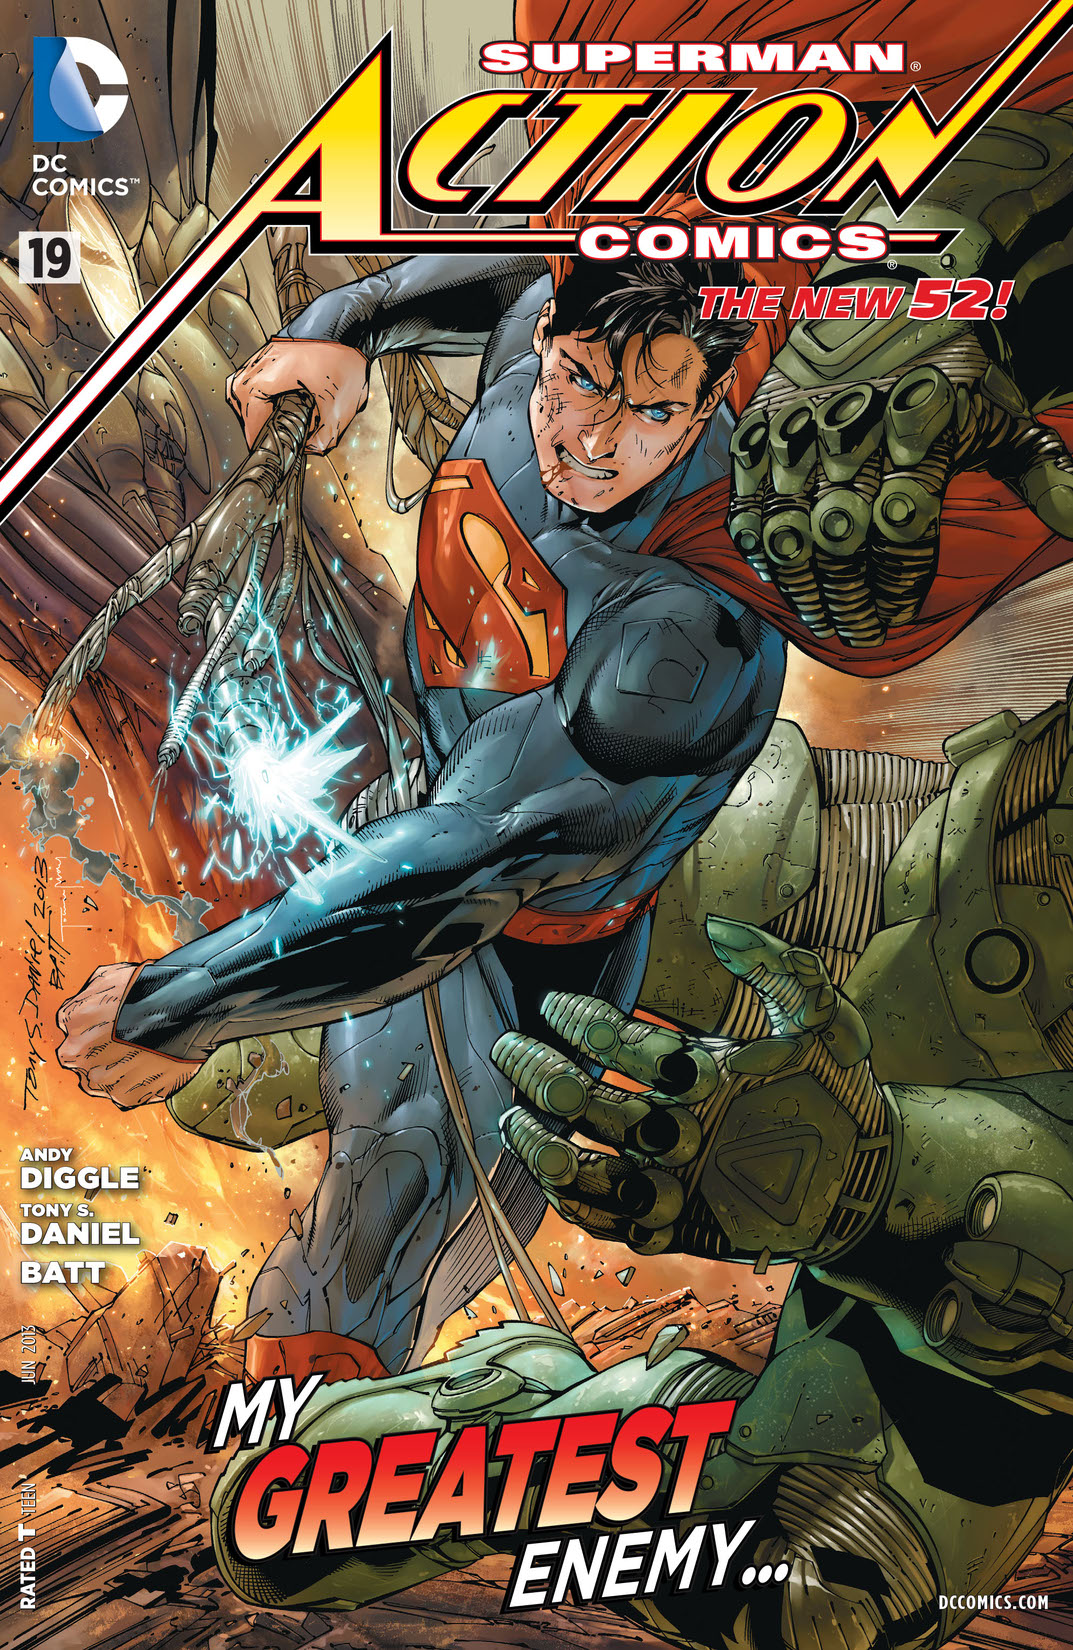 Action Comics (2011-) #19 preview images